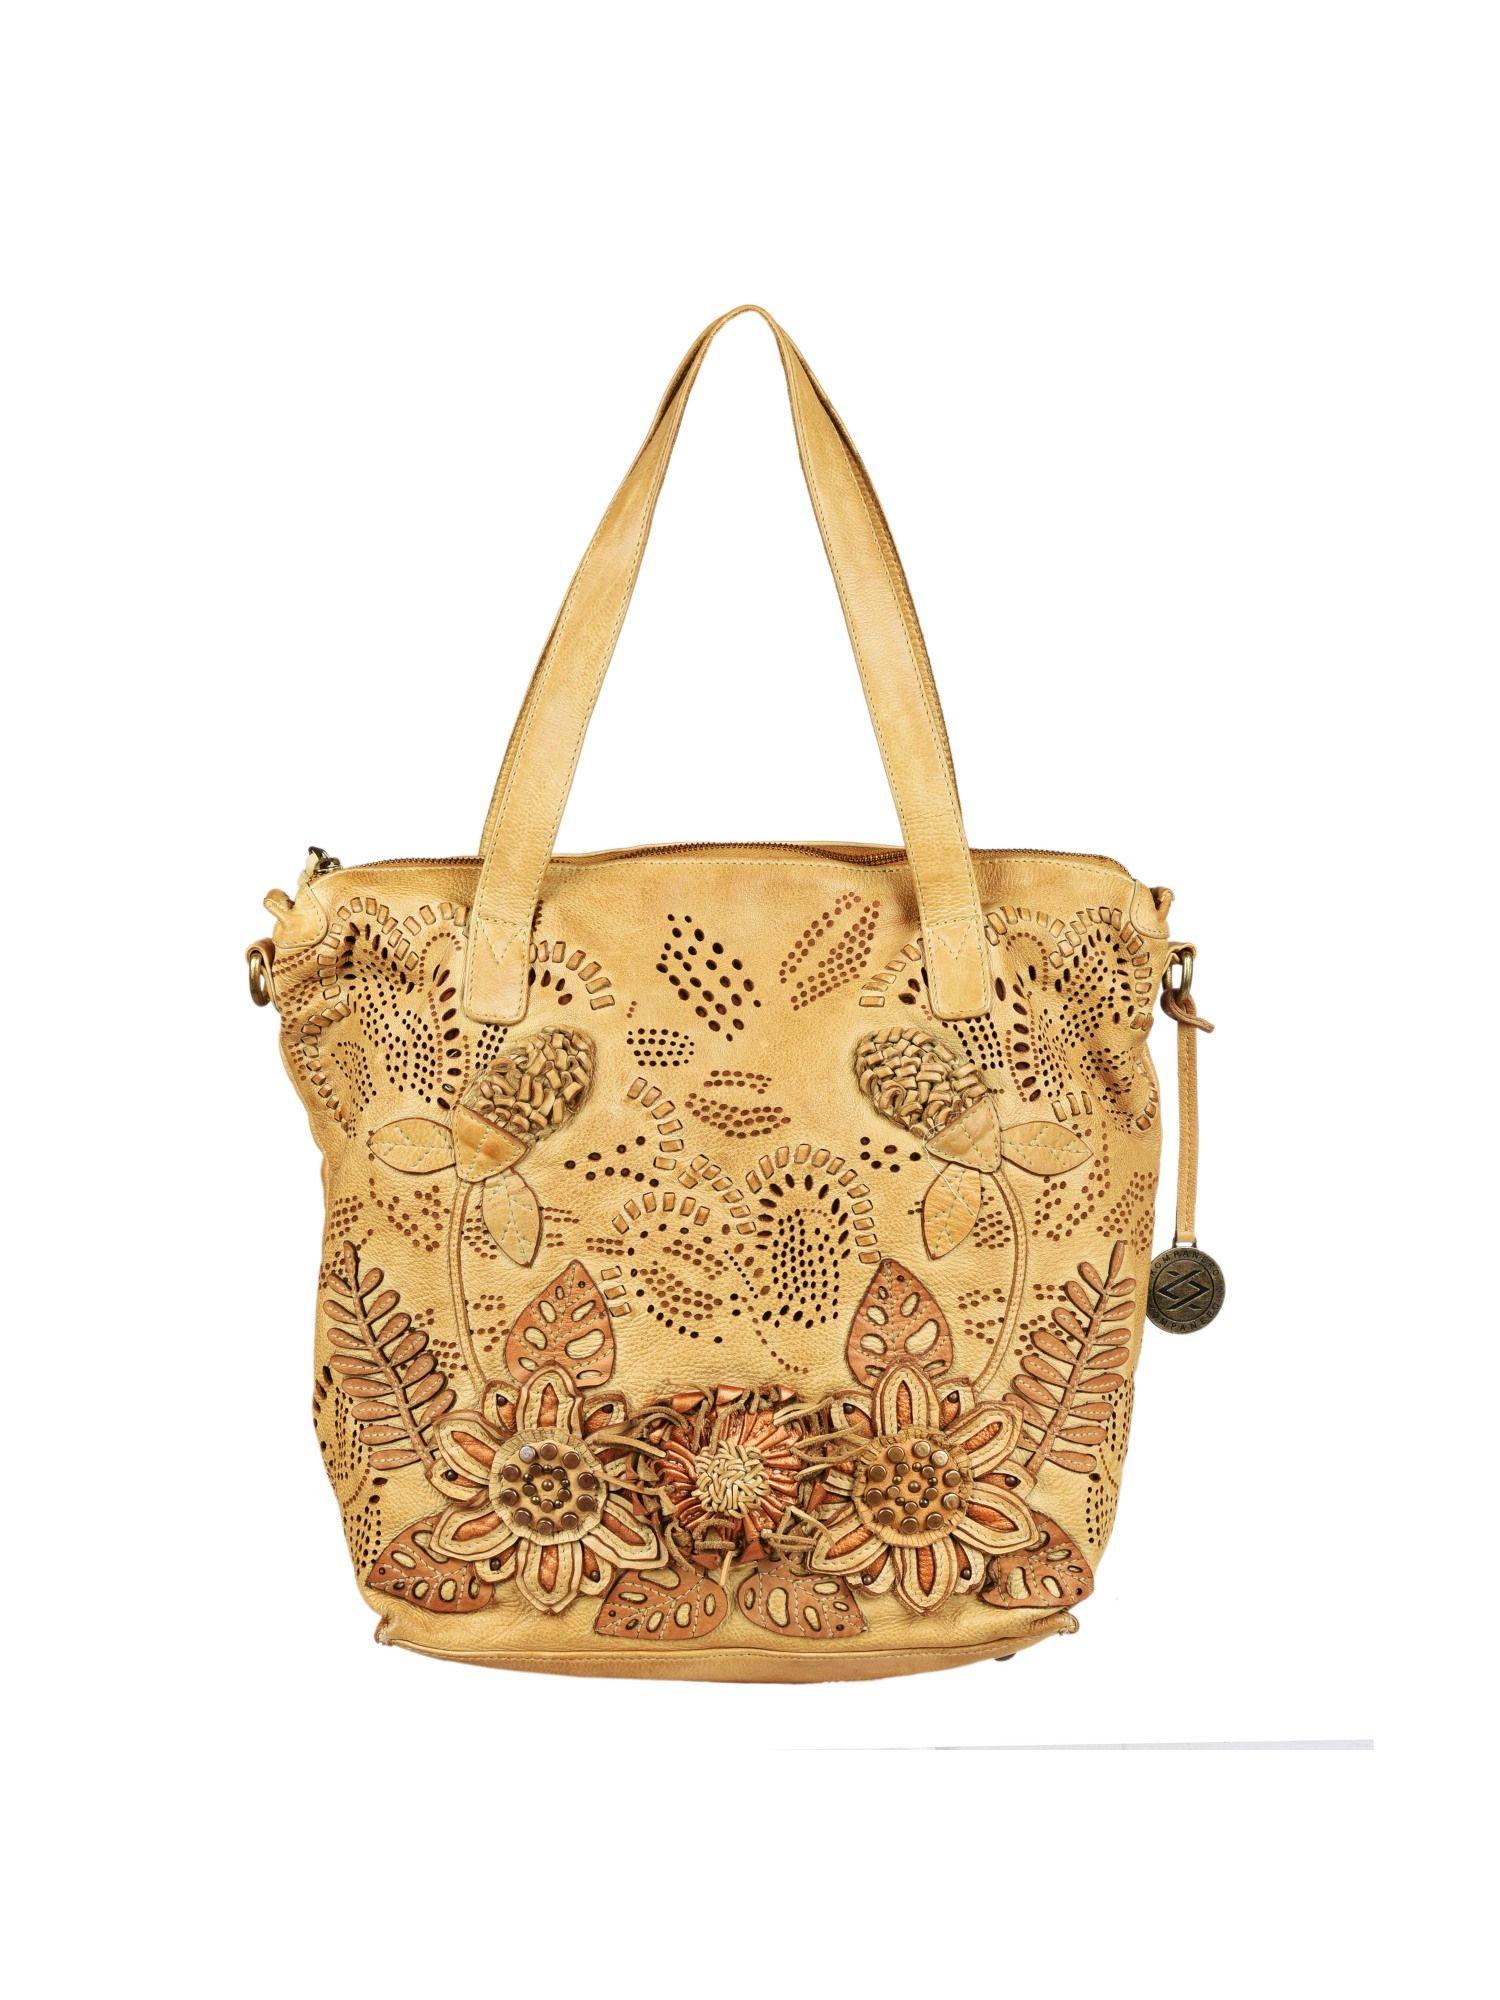 gardenia - the handbag